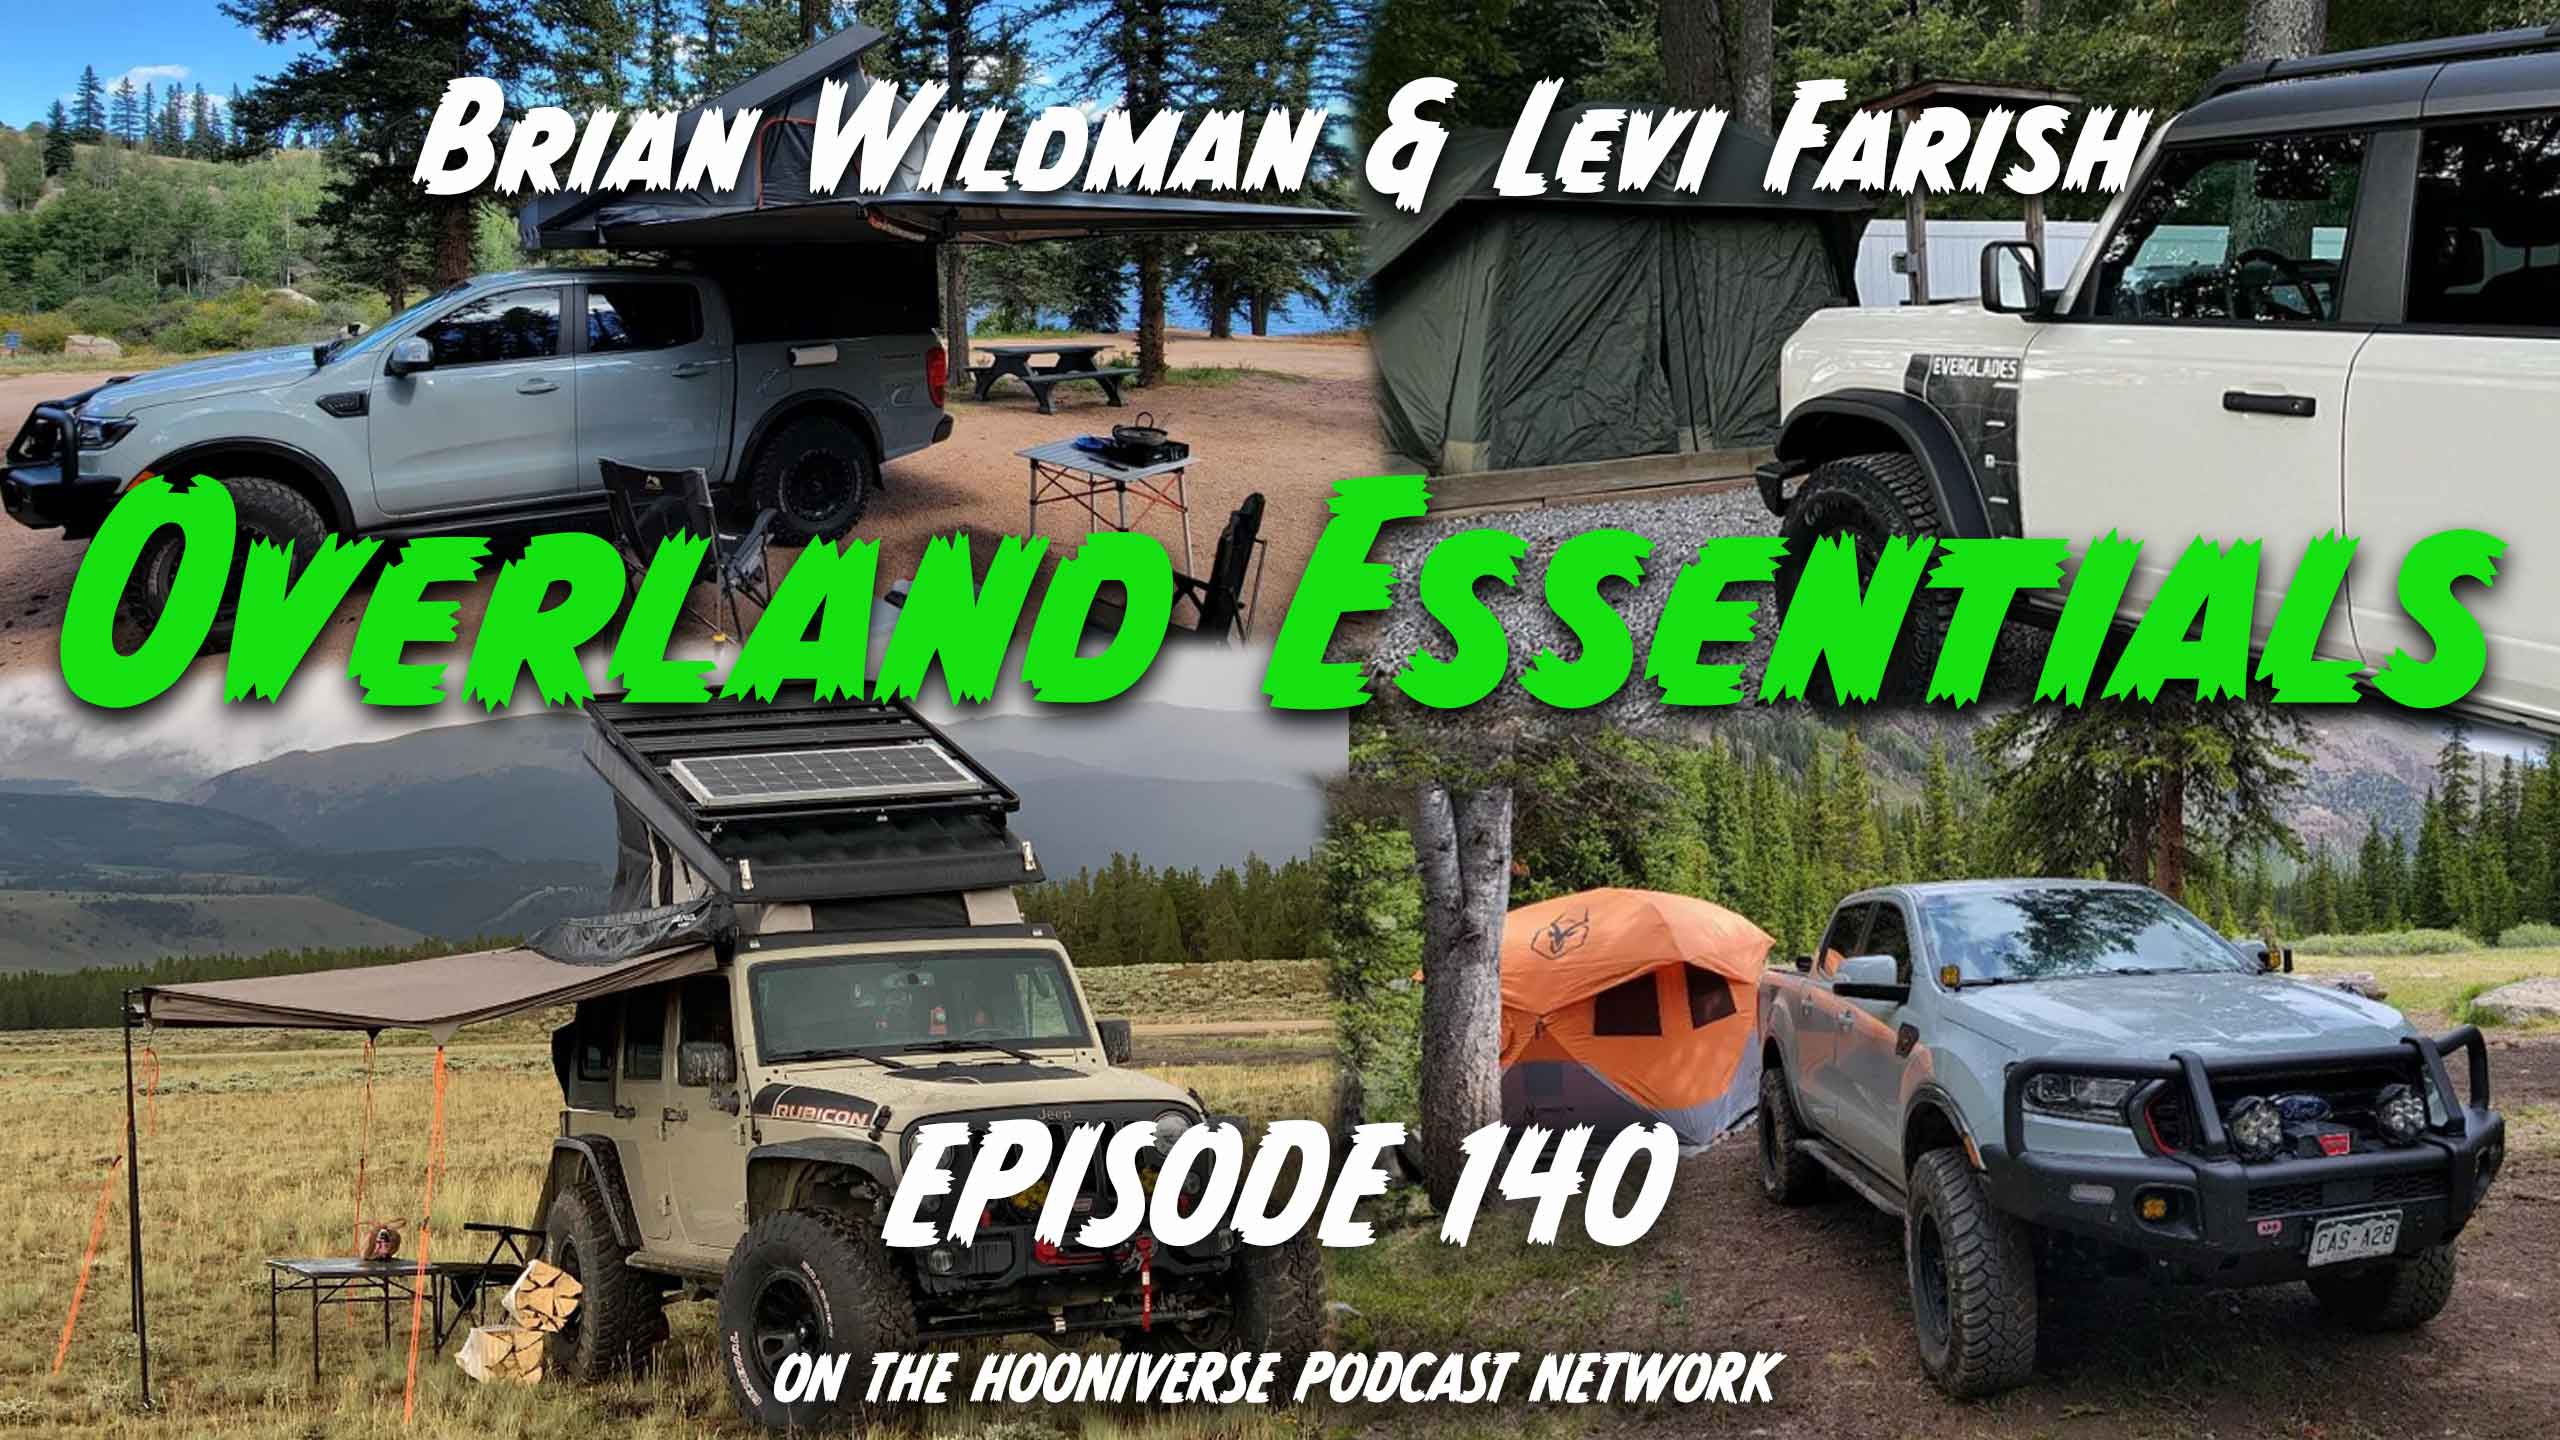 Overland-Essentials-Brian-Wildman-Levi-Farish-Off-The-Road-Again-Episode-140